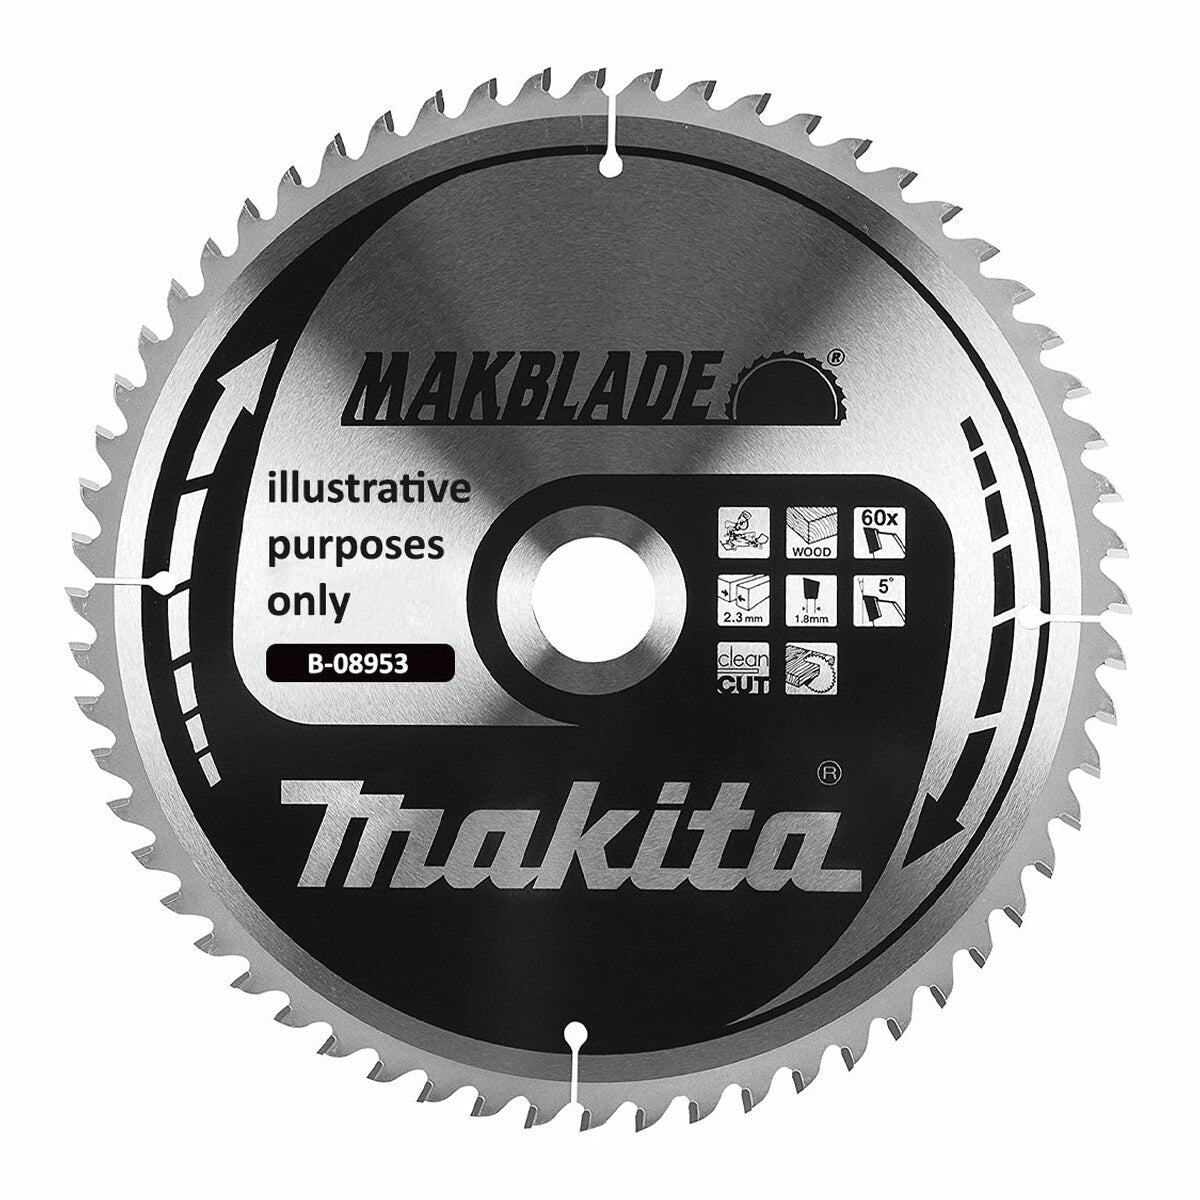 Makita 190mm 60T Makblade Plus Mitre Saw Cut Blade B-32580